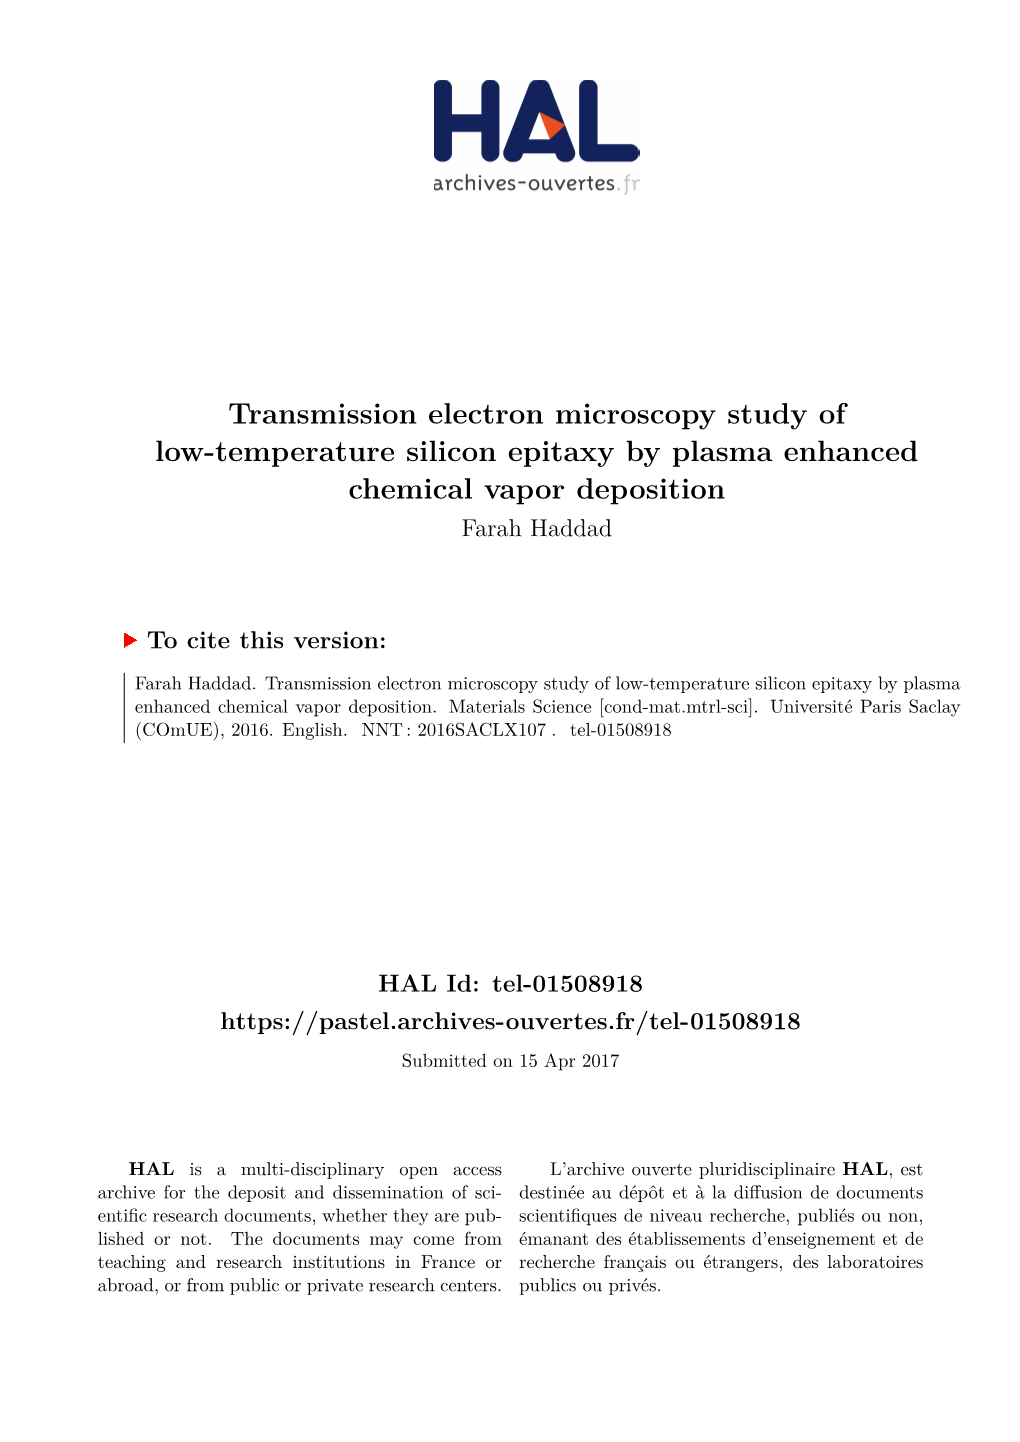 Transmission Electron Microscopy Study of Low-Temperature Silicon Epitaxy by Plasma Enhanced Chemical Vapor Deposition Farah Haddad